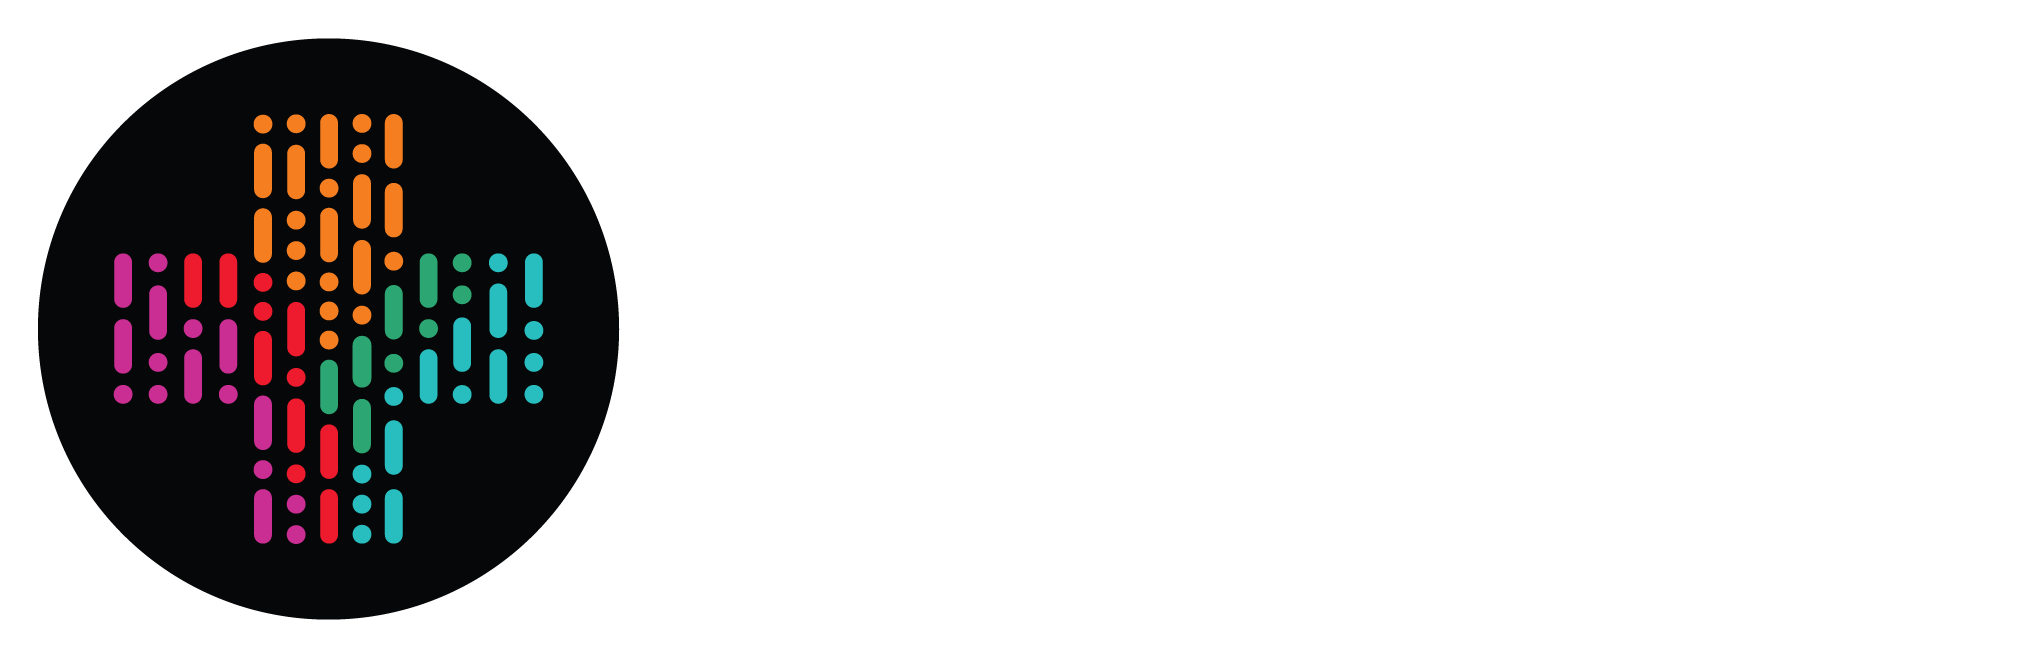 Computational One Health